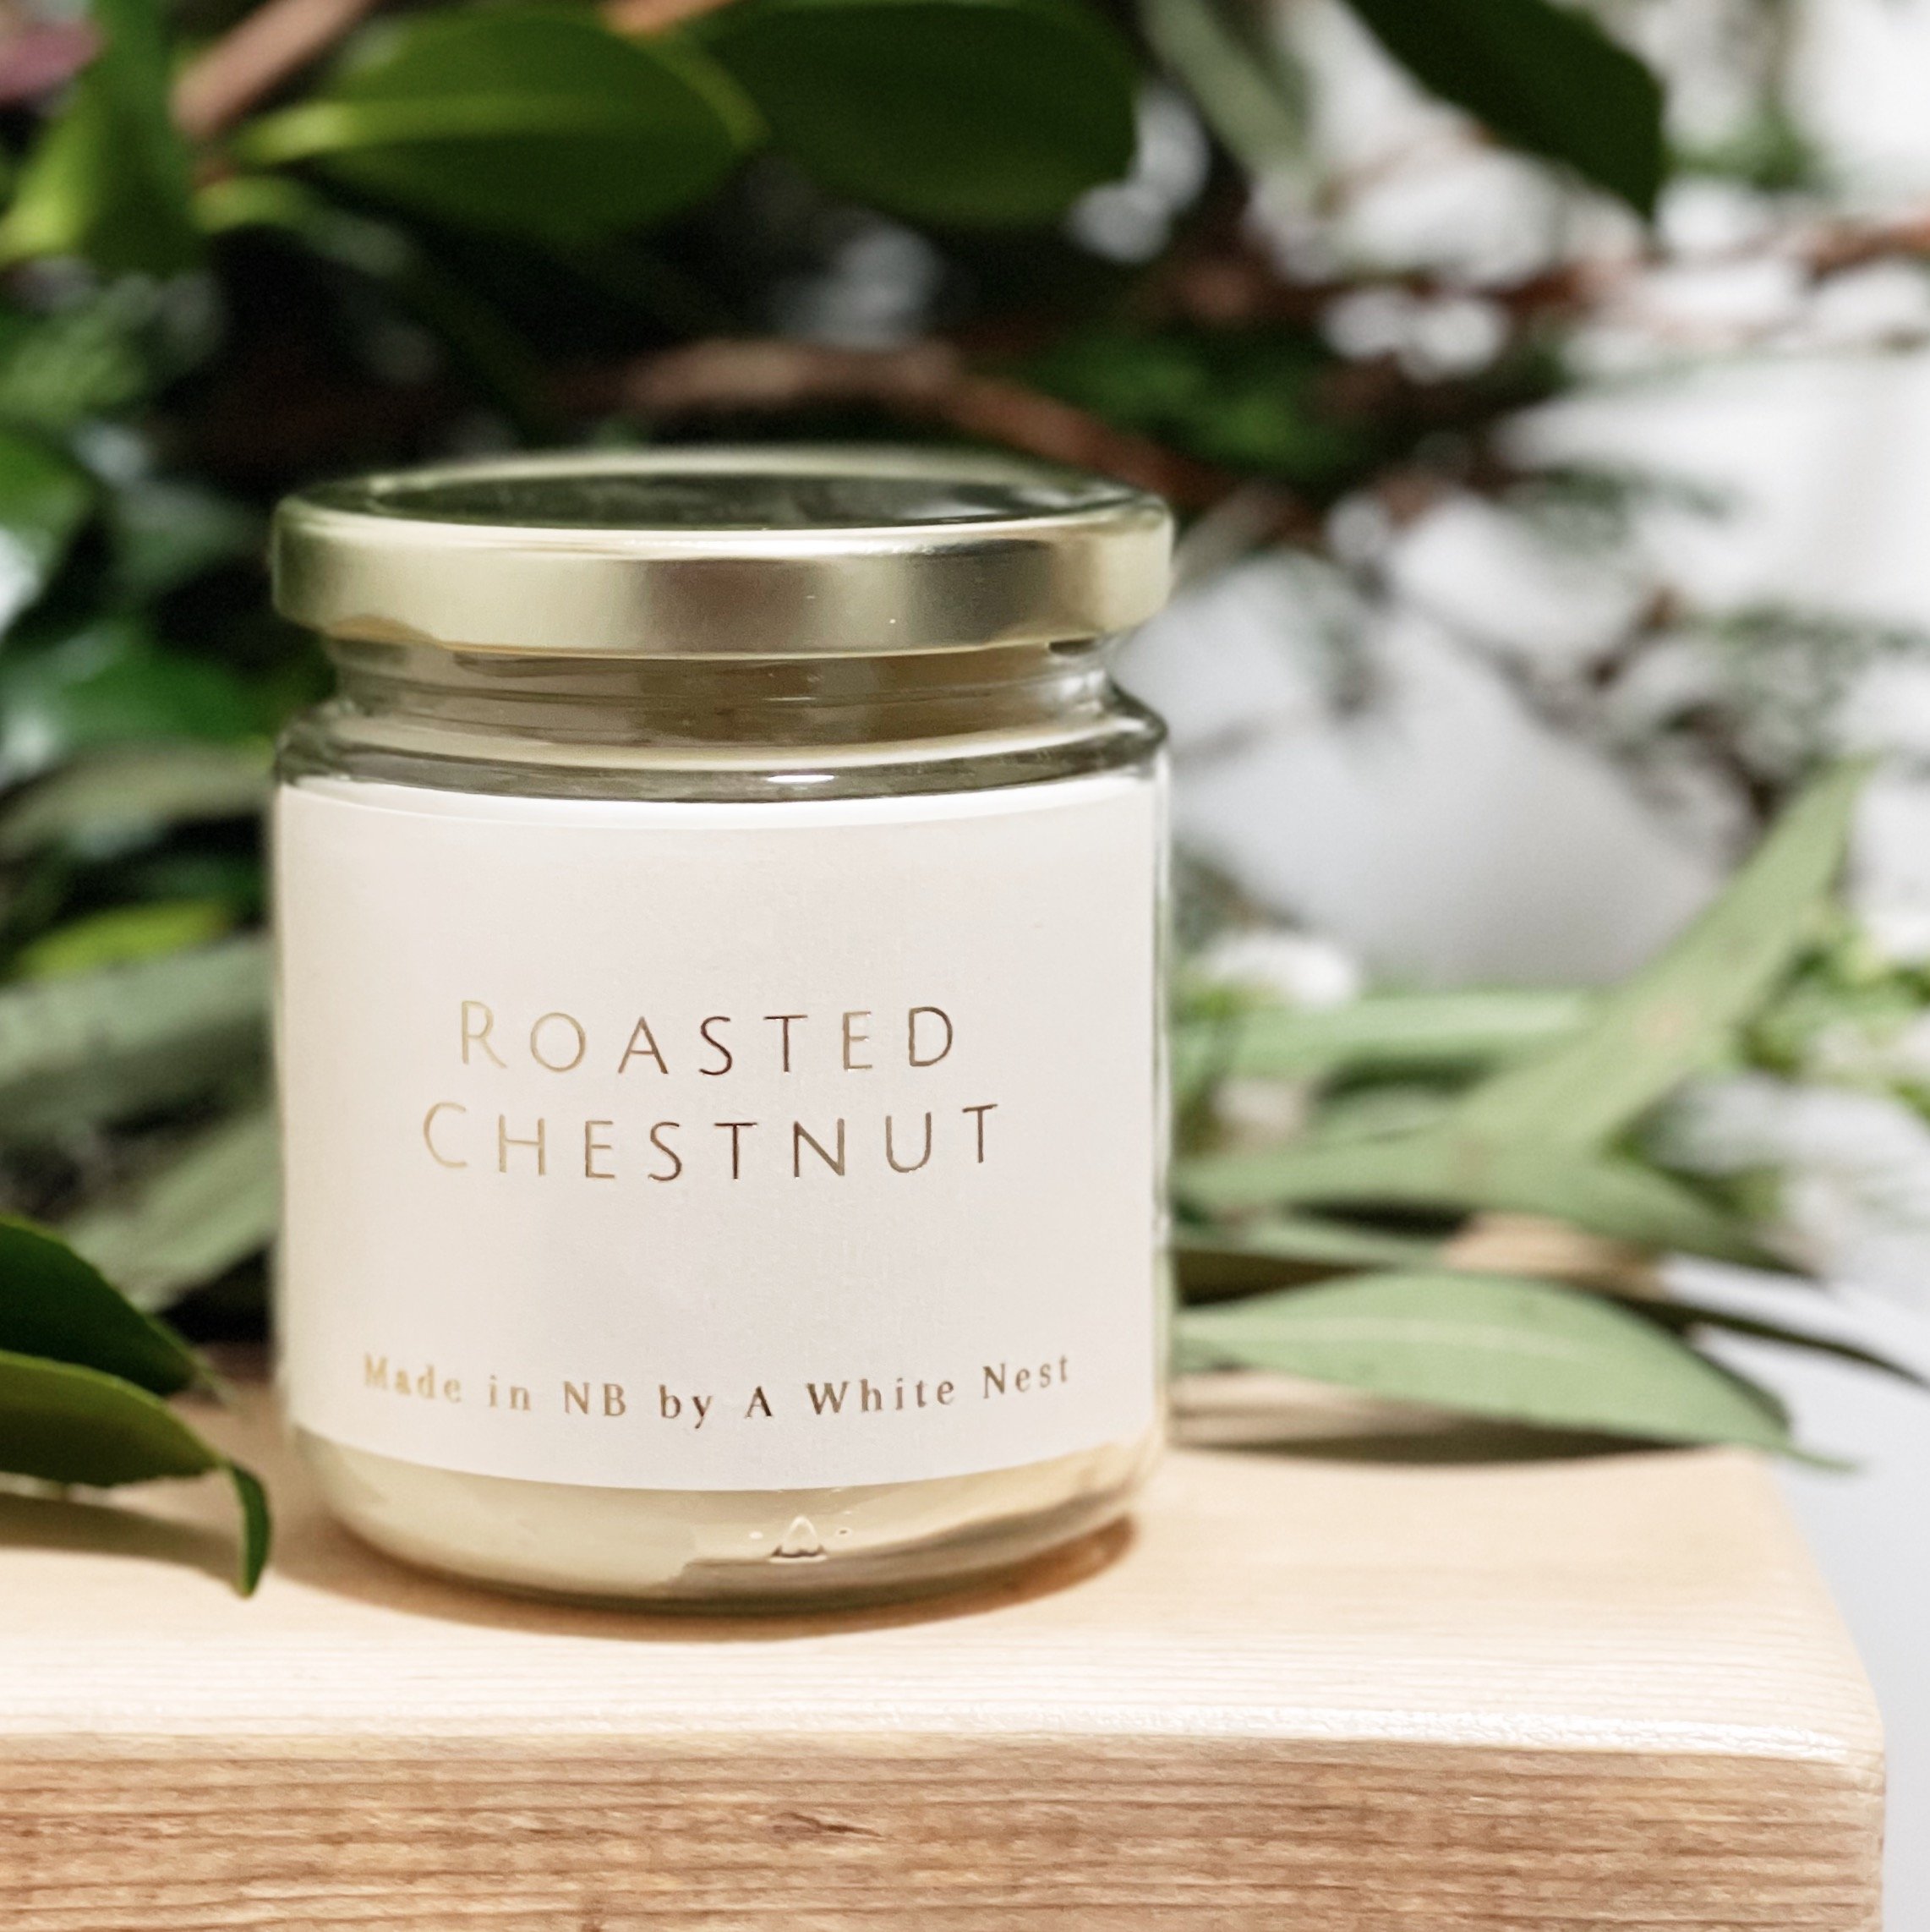 Roasted Chestnut Candle - $20.00